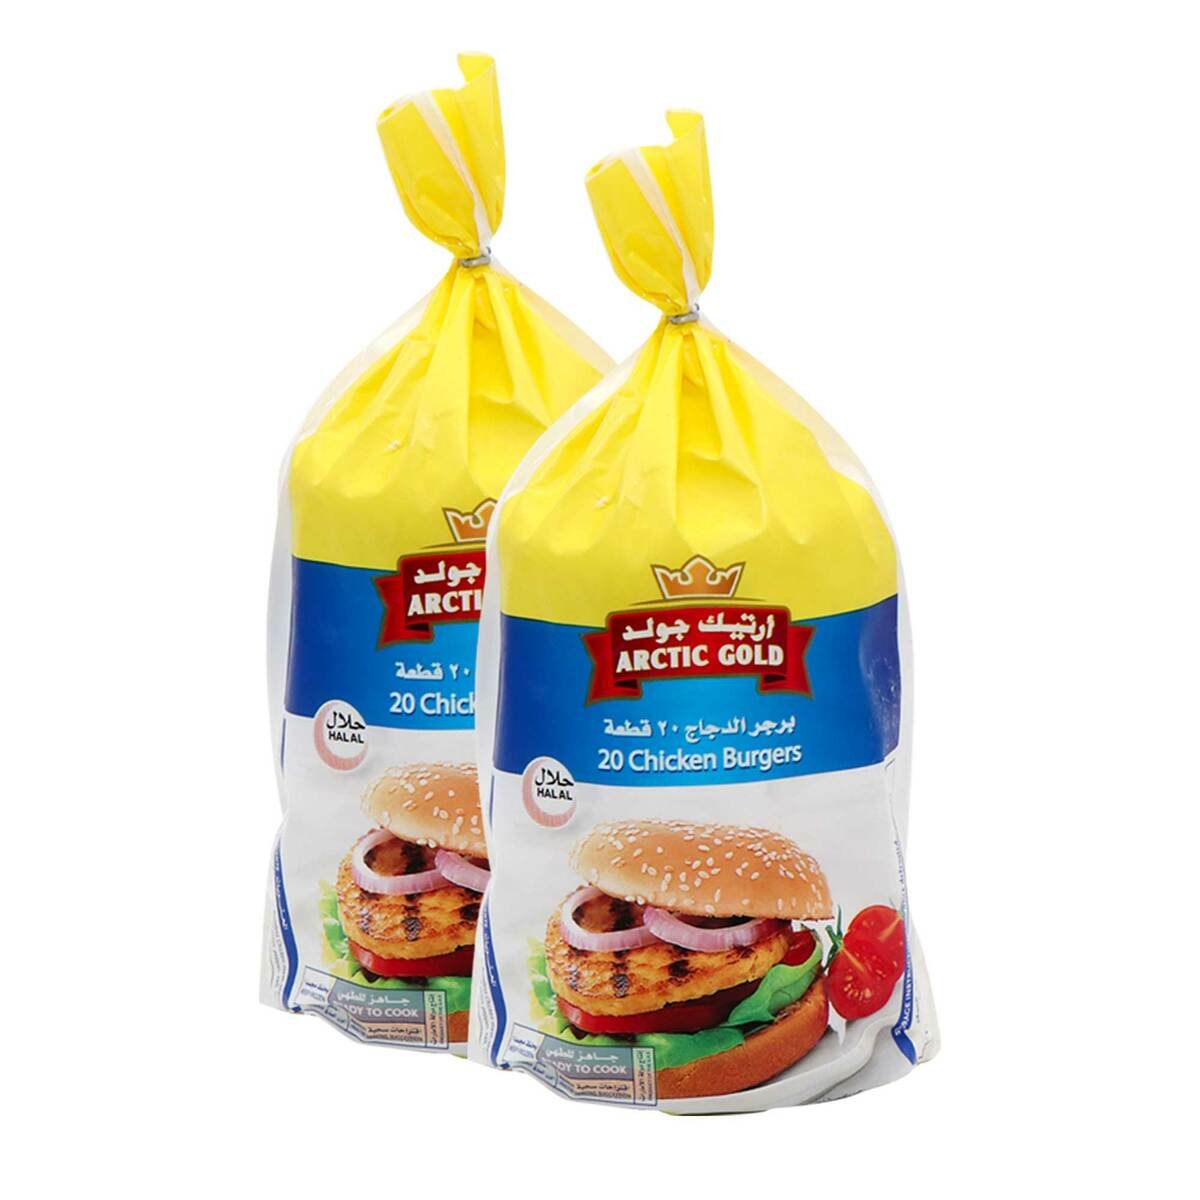 Arctic Gold Chicken Burger Bag 2 x 1kg